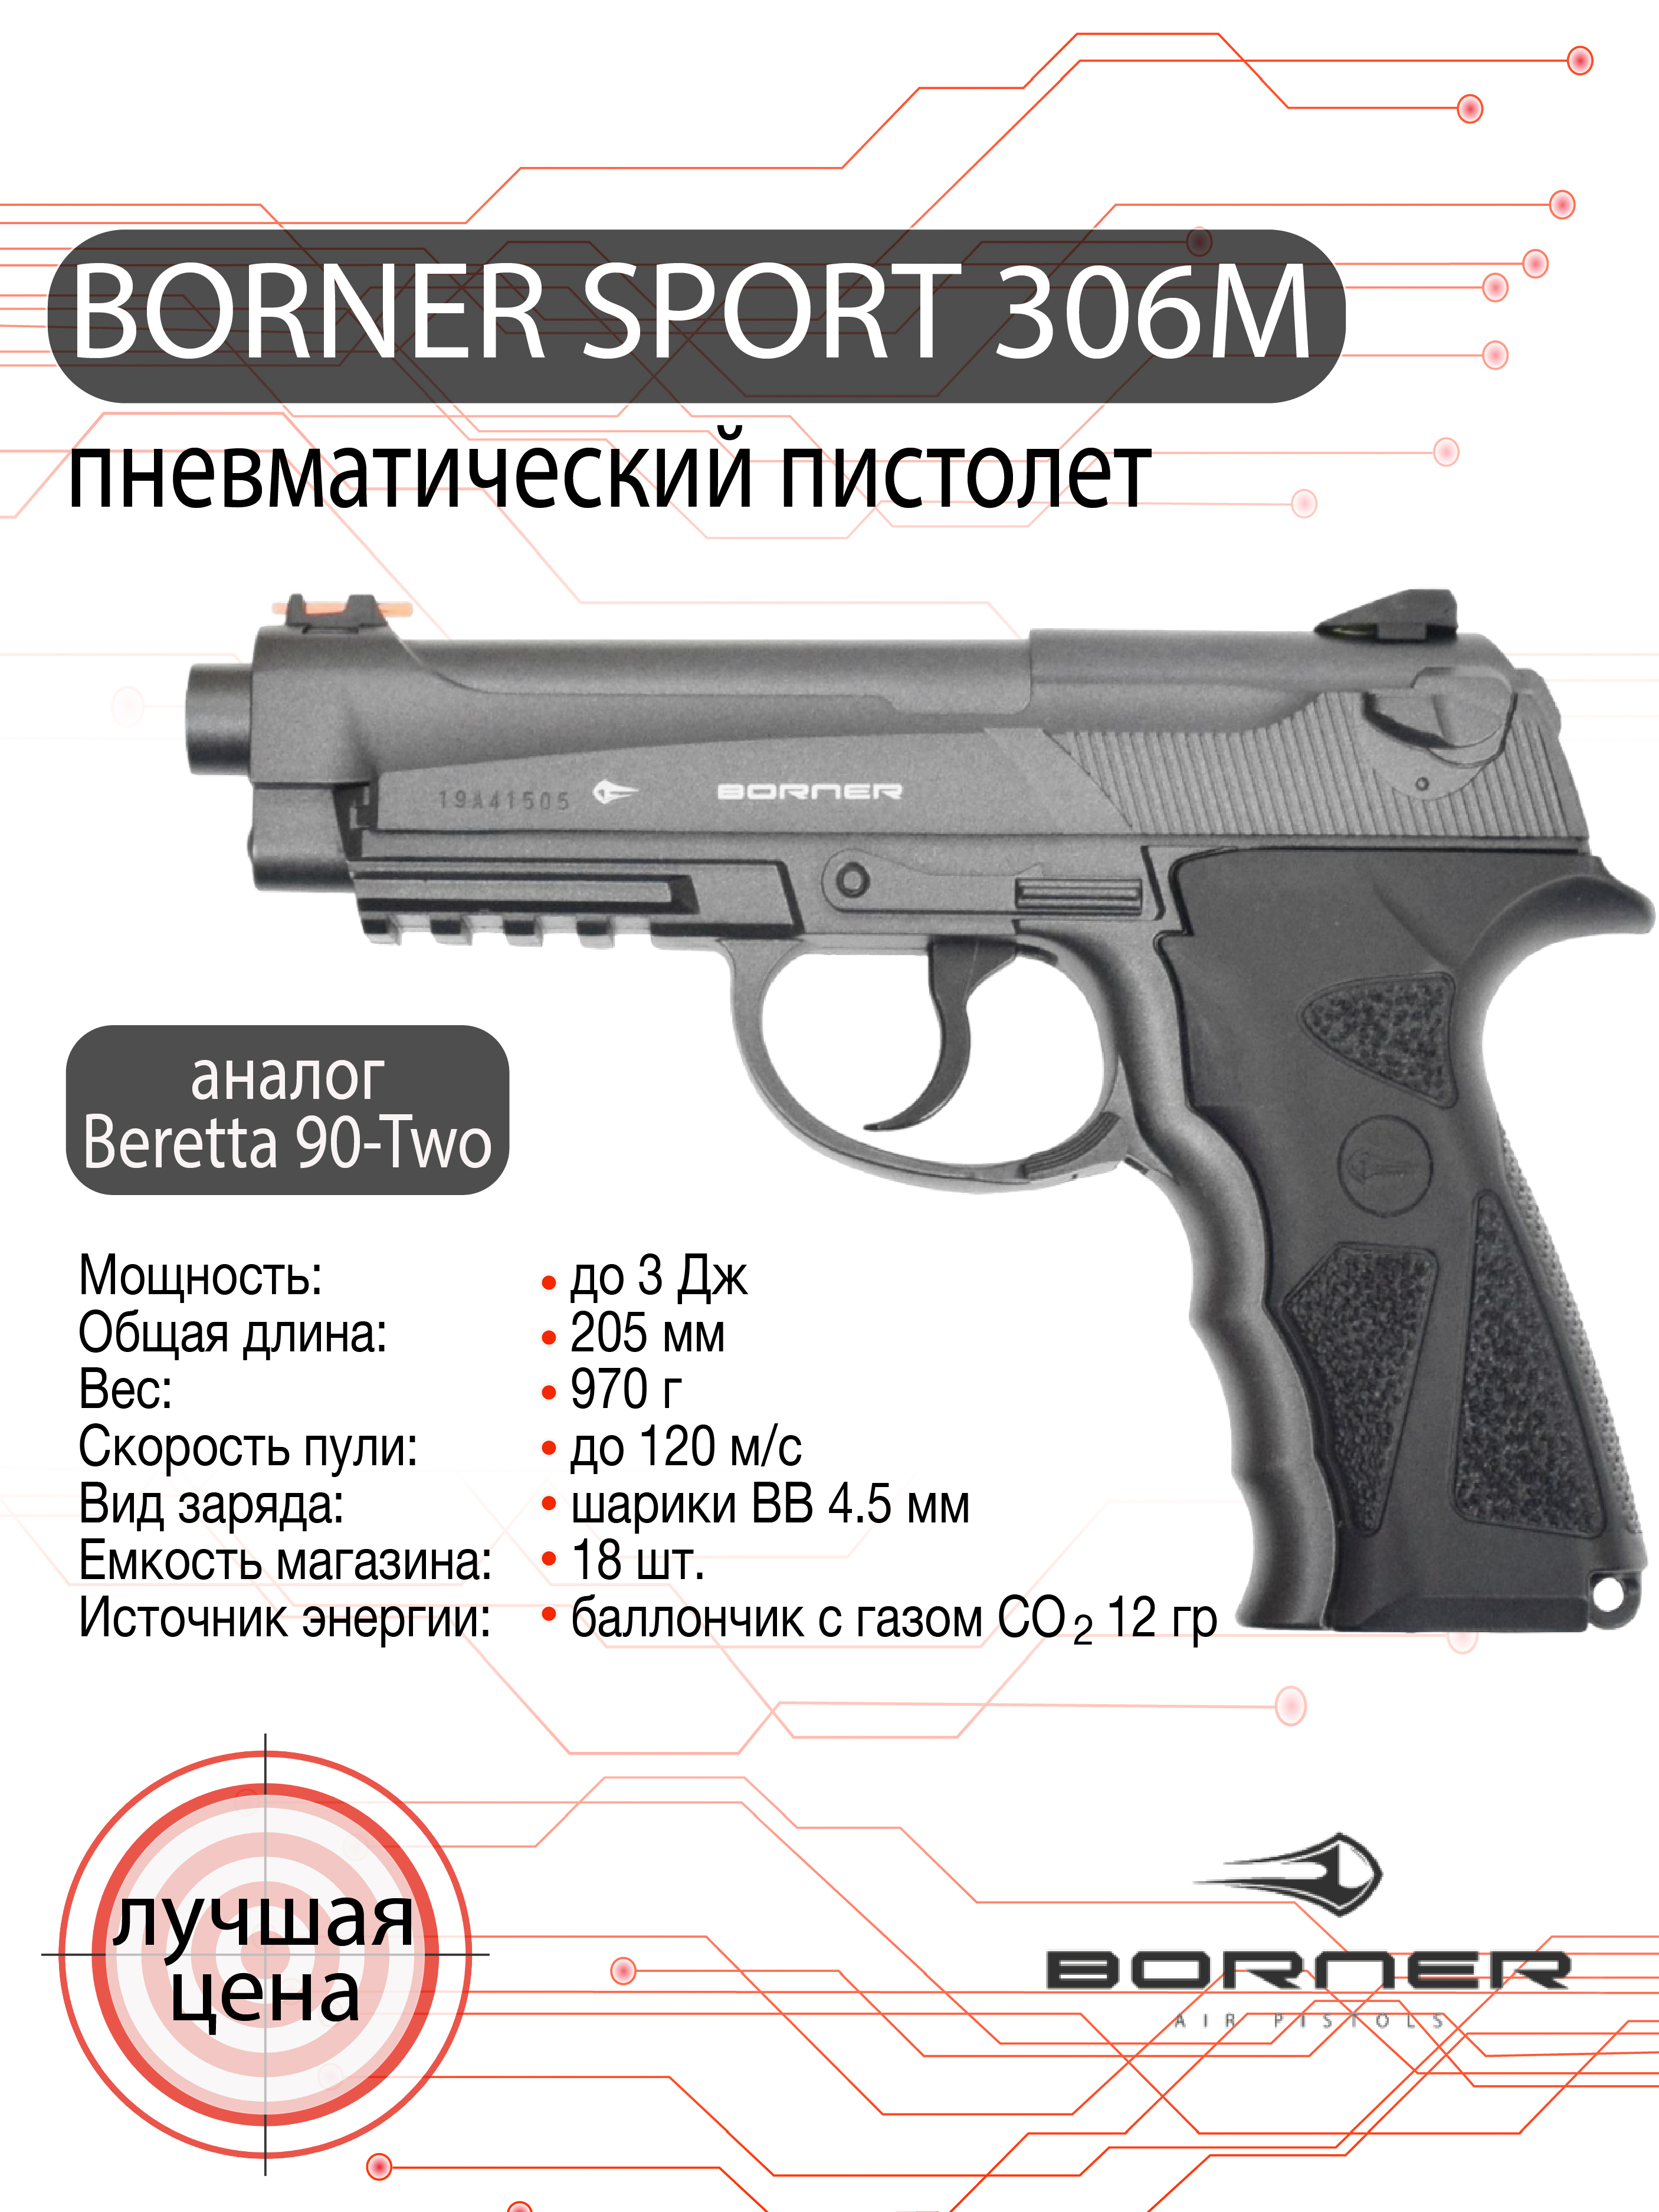 Пневматический пистолет Borner Sport 306M (beretta), калибр 4,5 мм